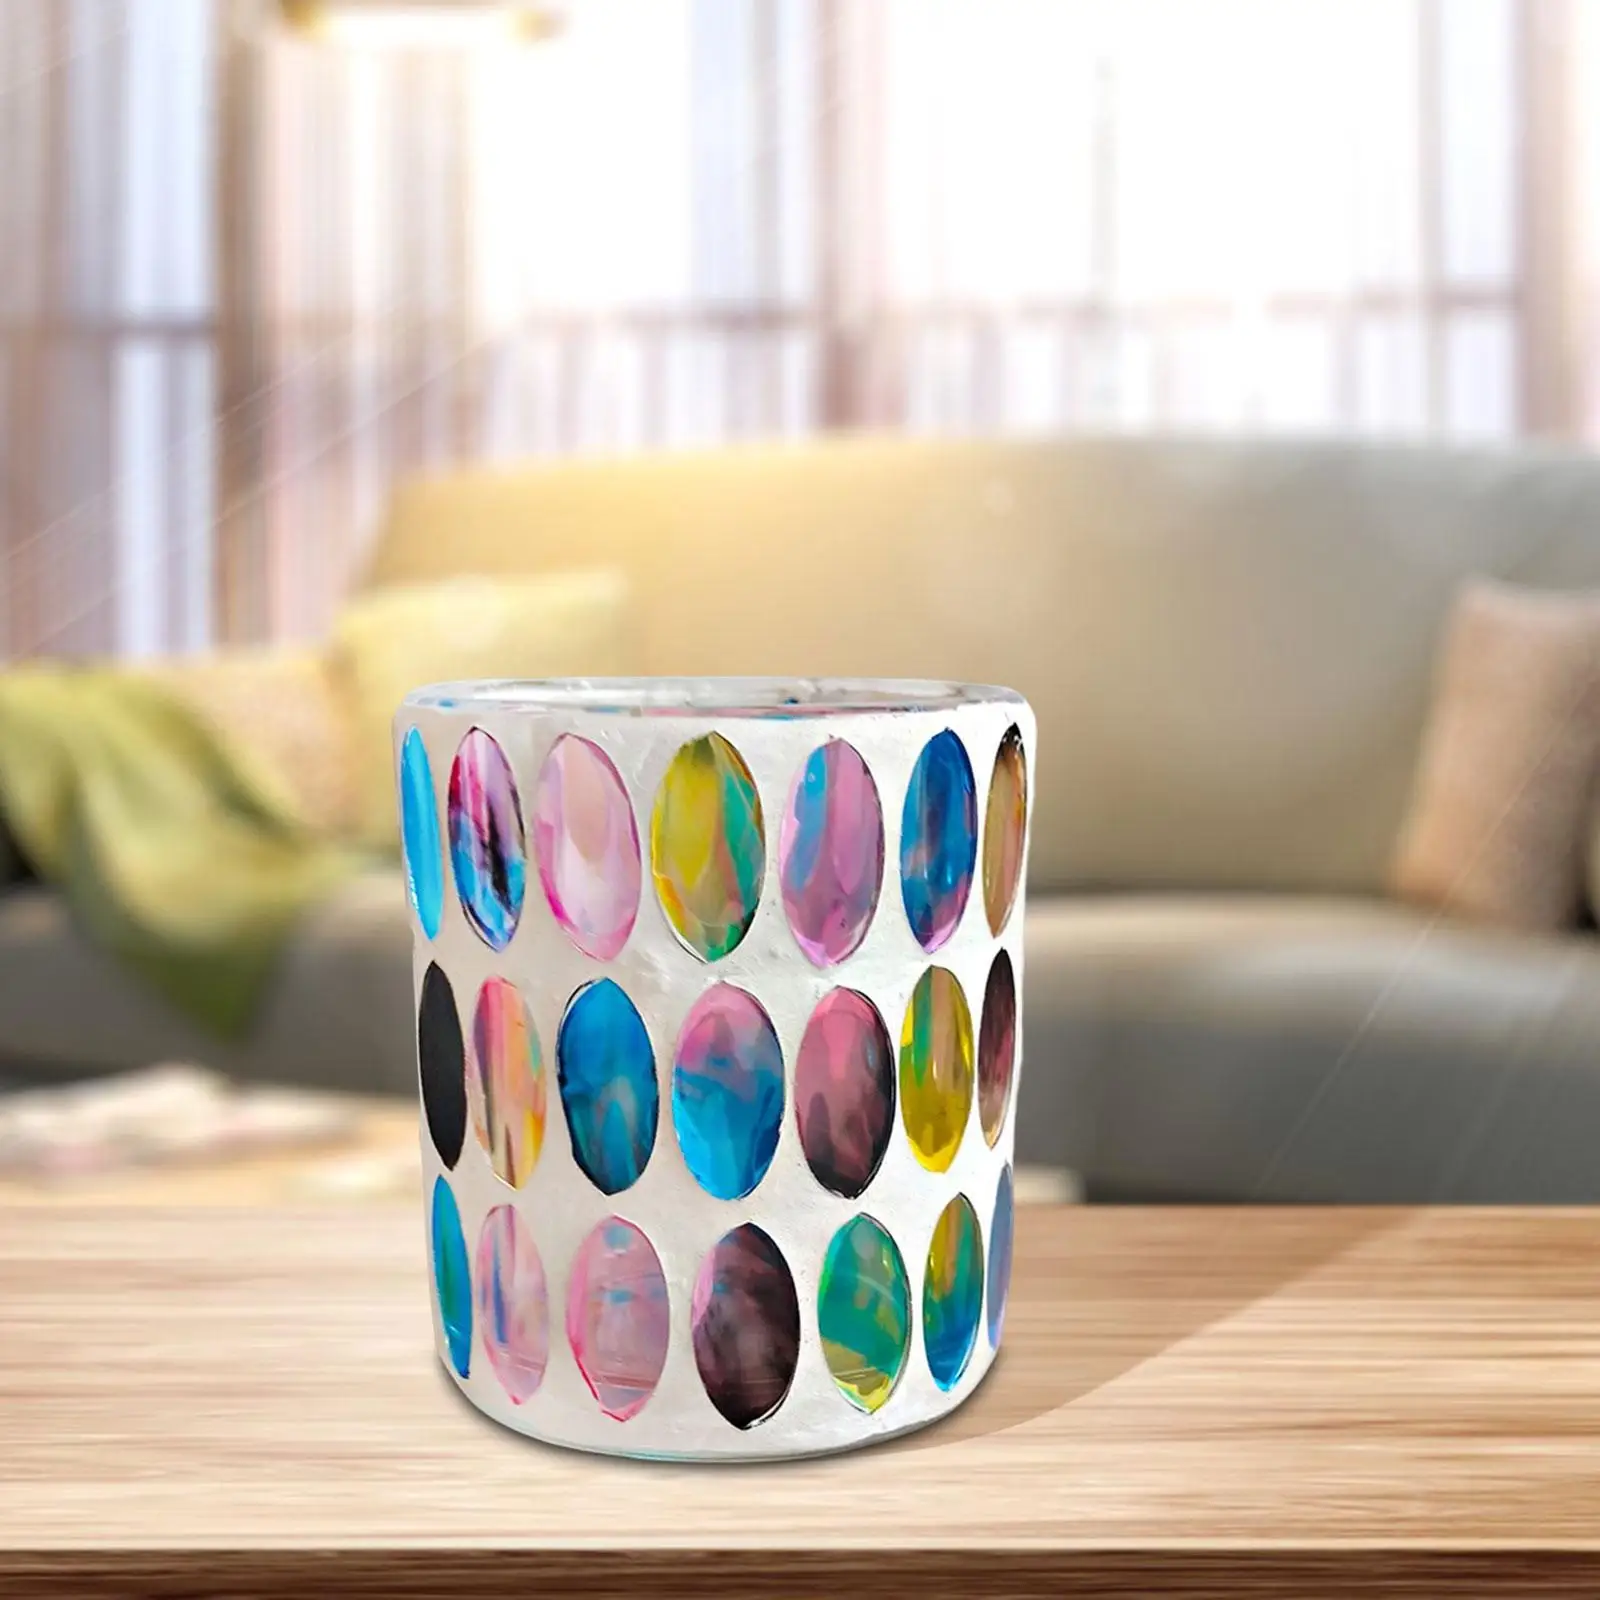 Tealight Holder Artwork Mosaic Glass Candle Jars, for Home Festivals Decor